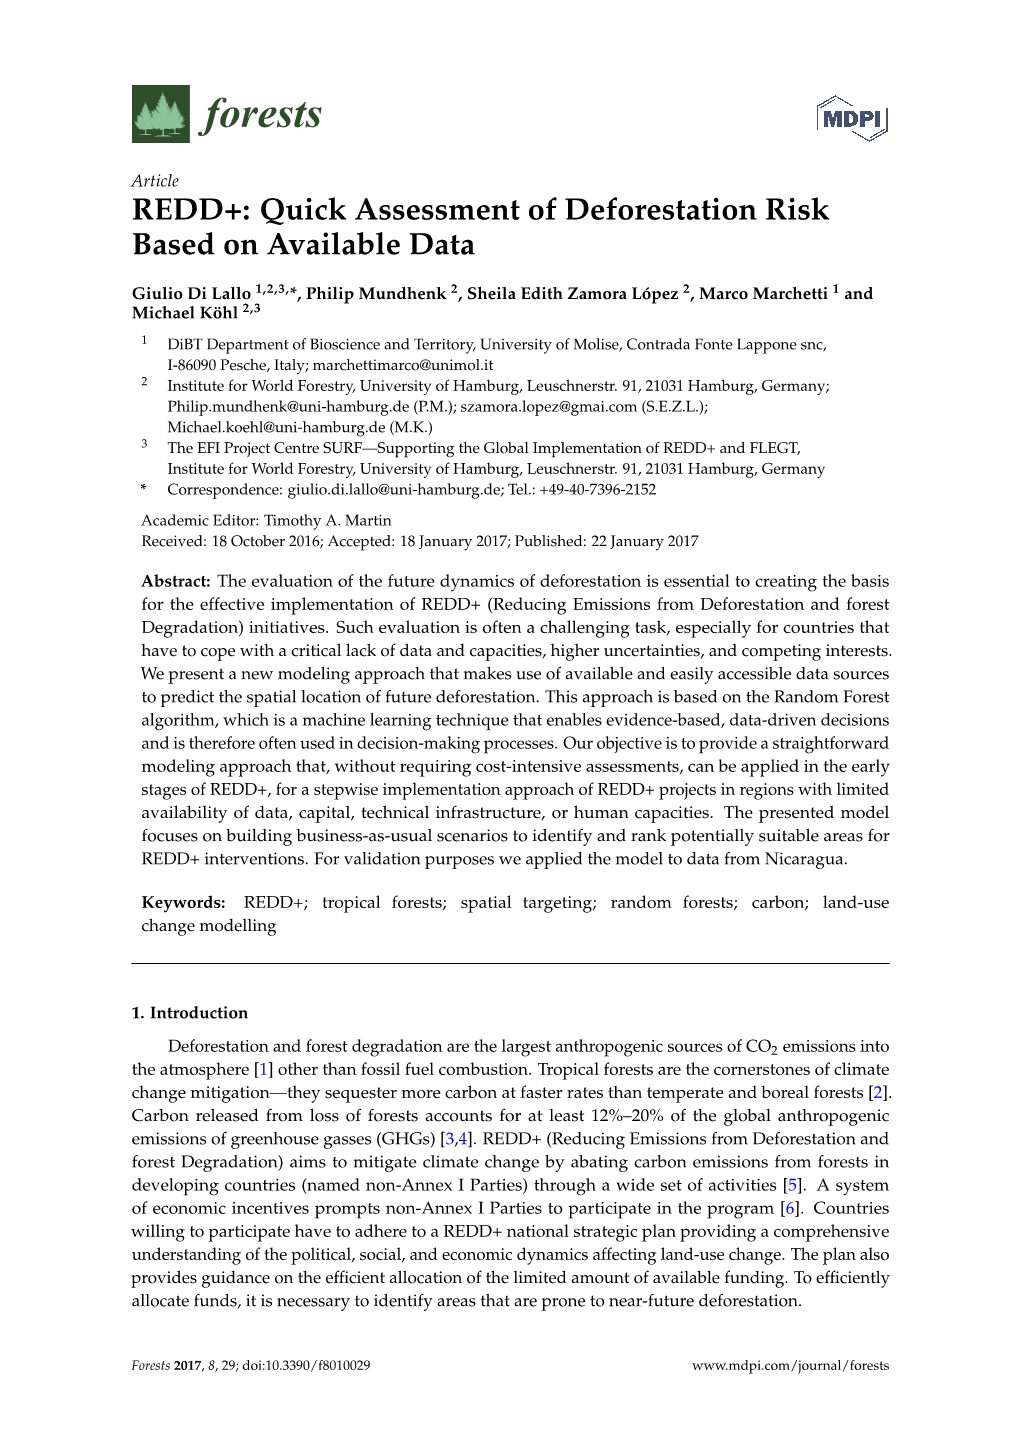 Quick Assessment of Deforestation Risk Based on Available Data